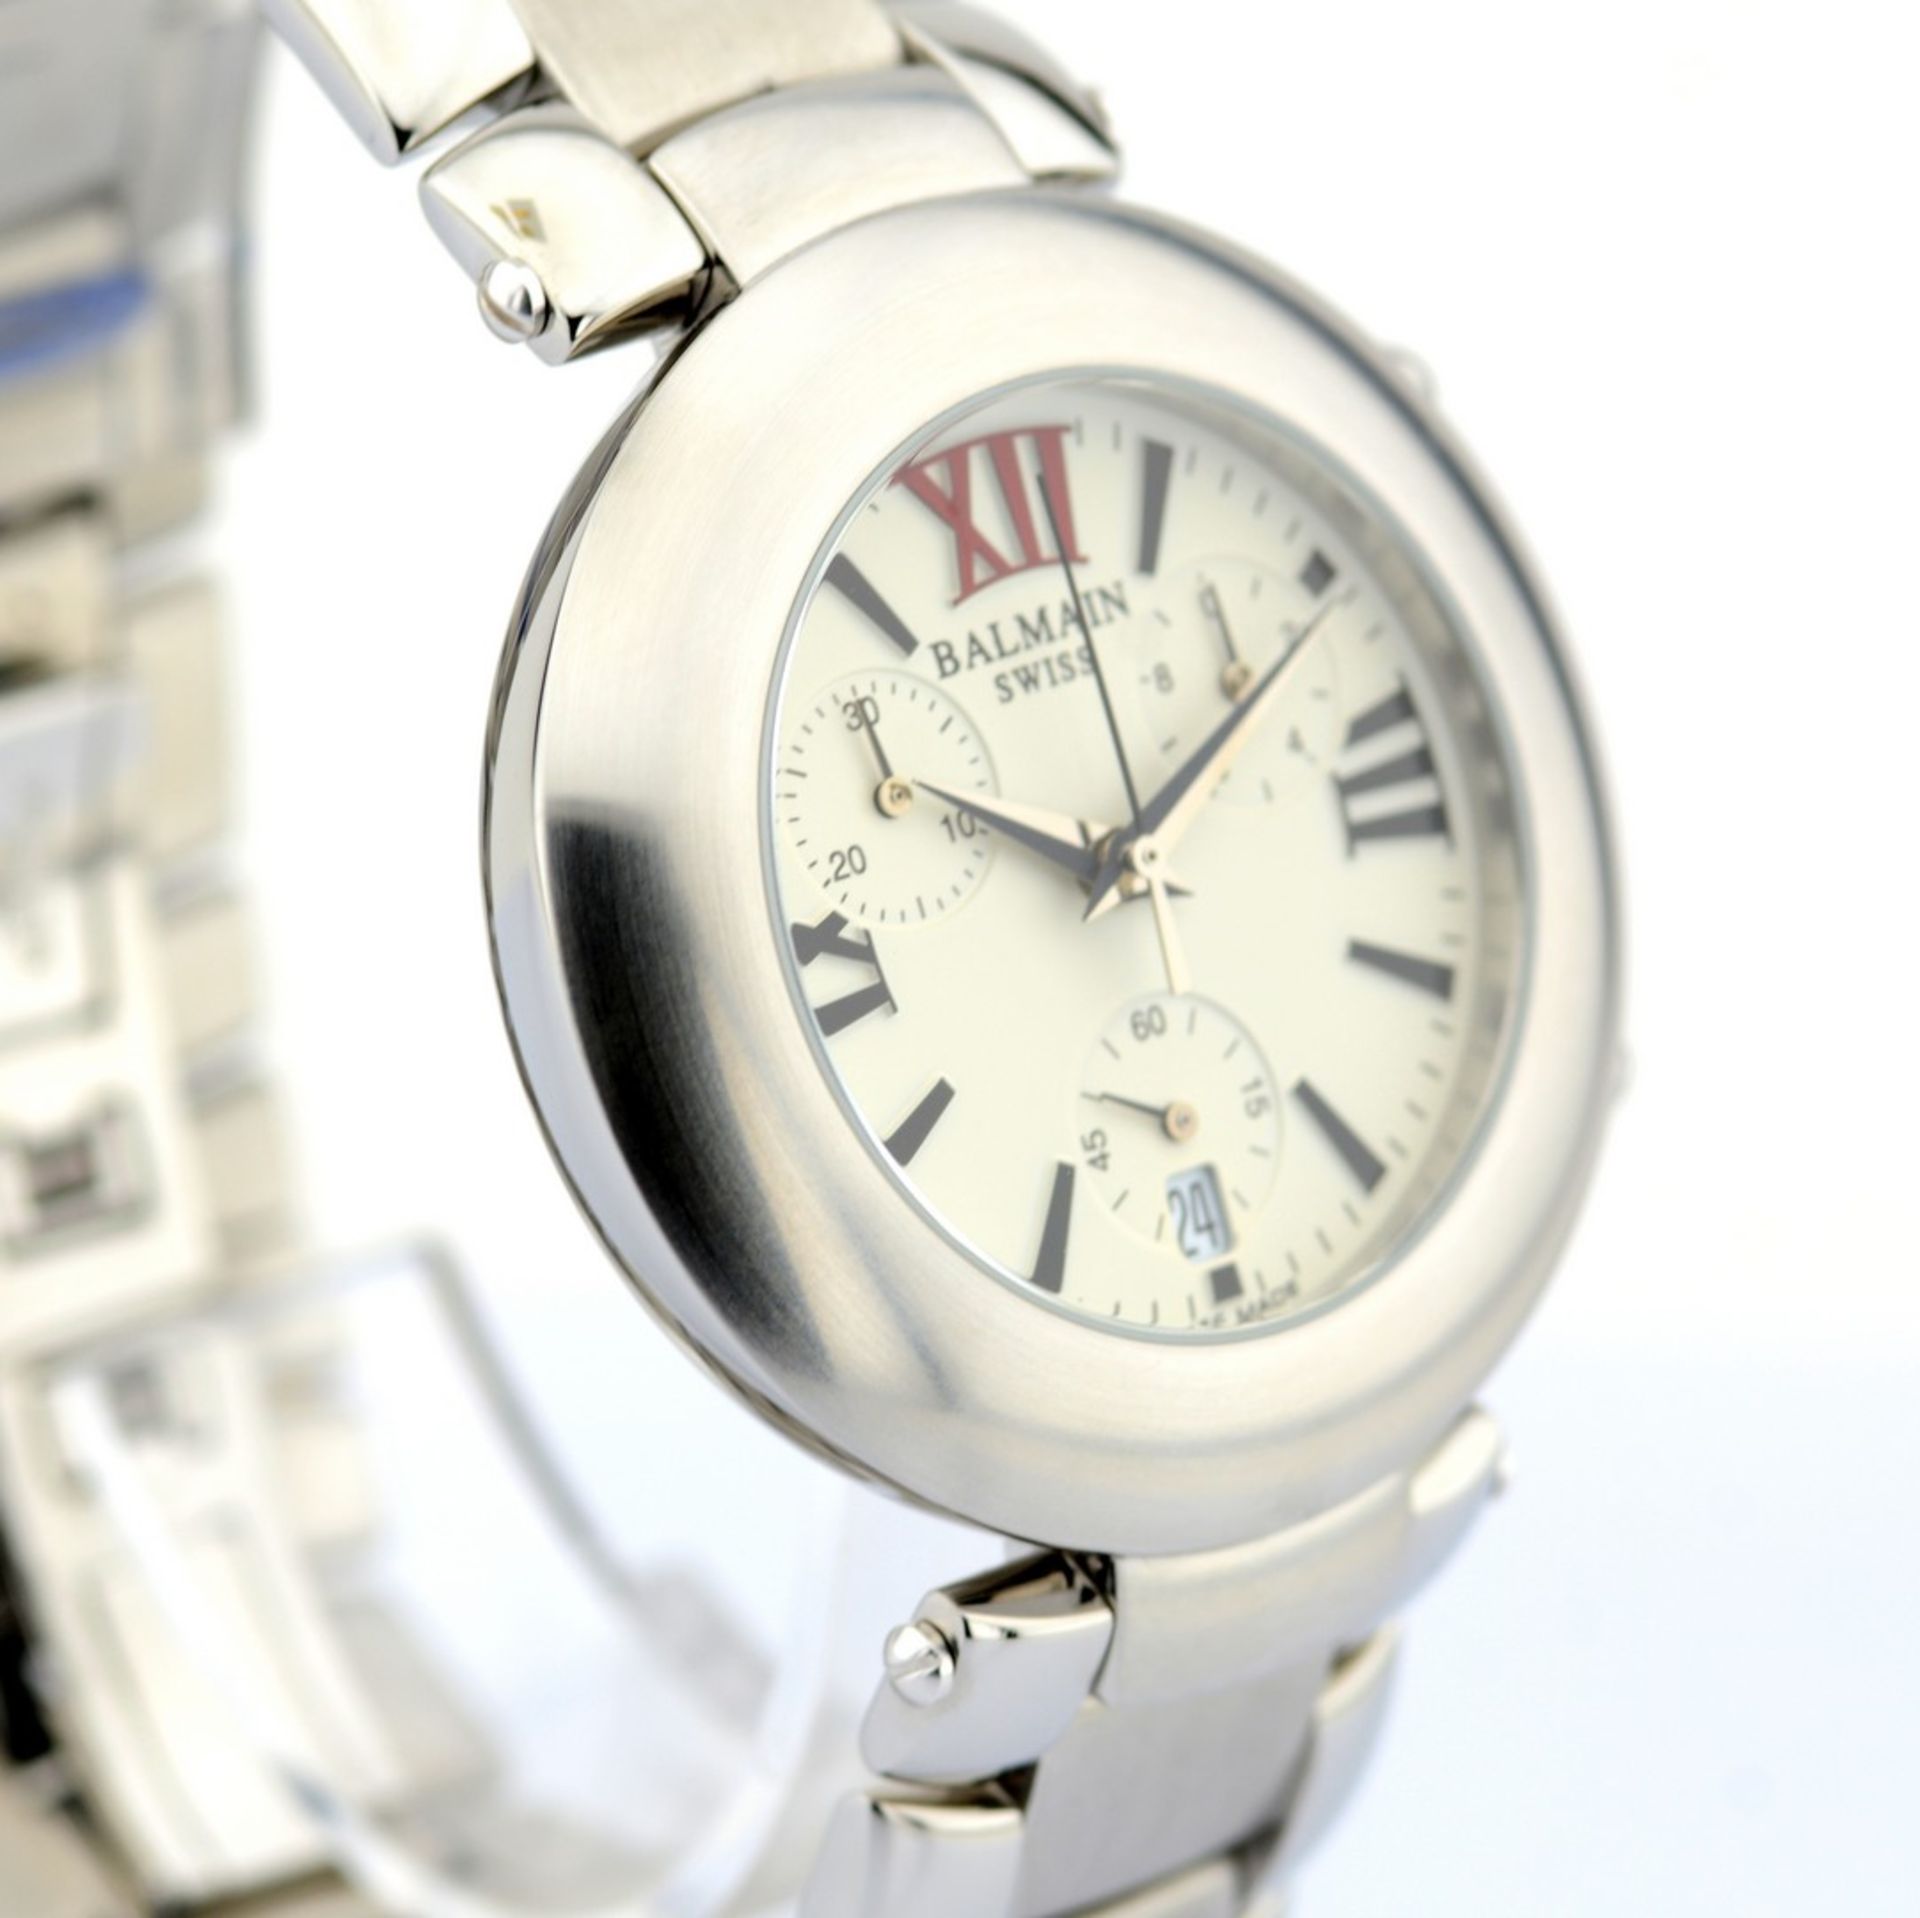 Pierre Balmain / Swiss Chronograph Date - Gentlemen's Steel Wristwatch - Image 4 of 6